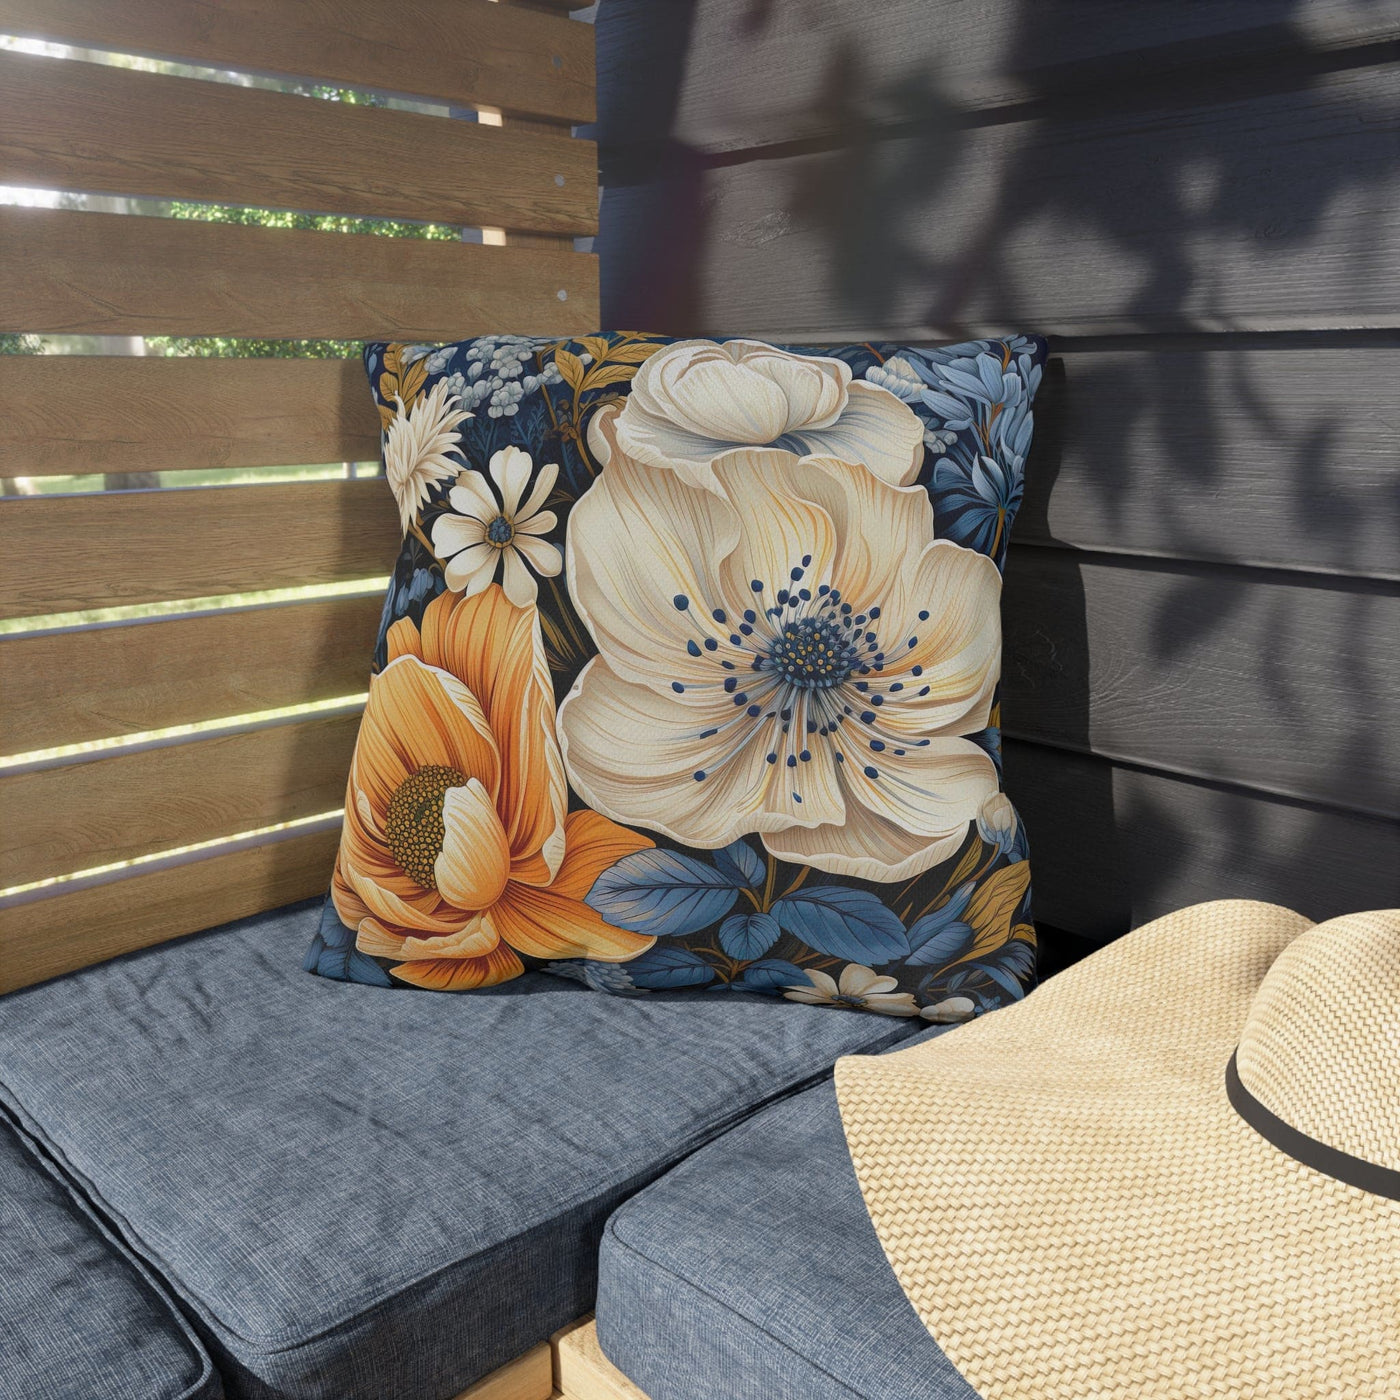 Decorative Outdoor Pillows With Zipper - Set Of 2 Blue Floral Block Print